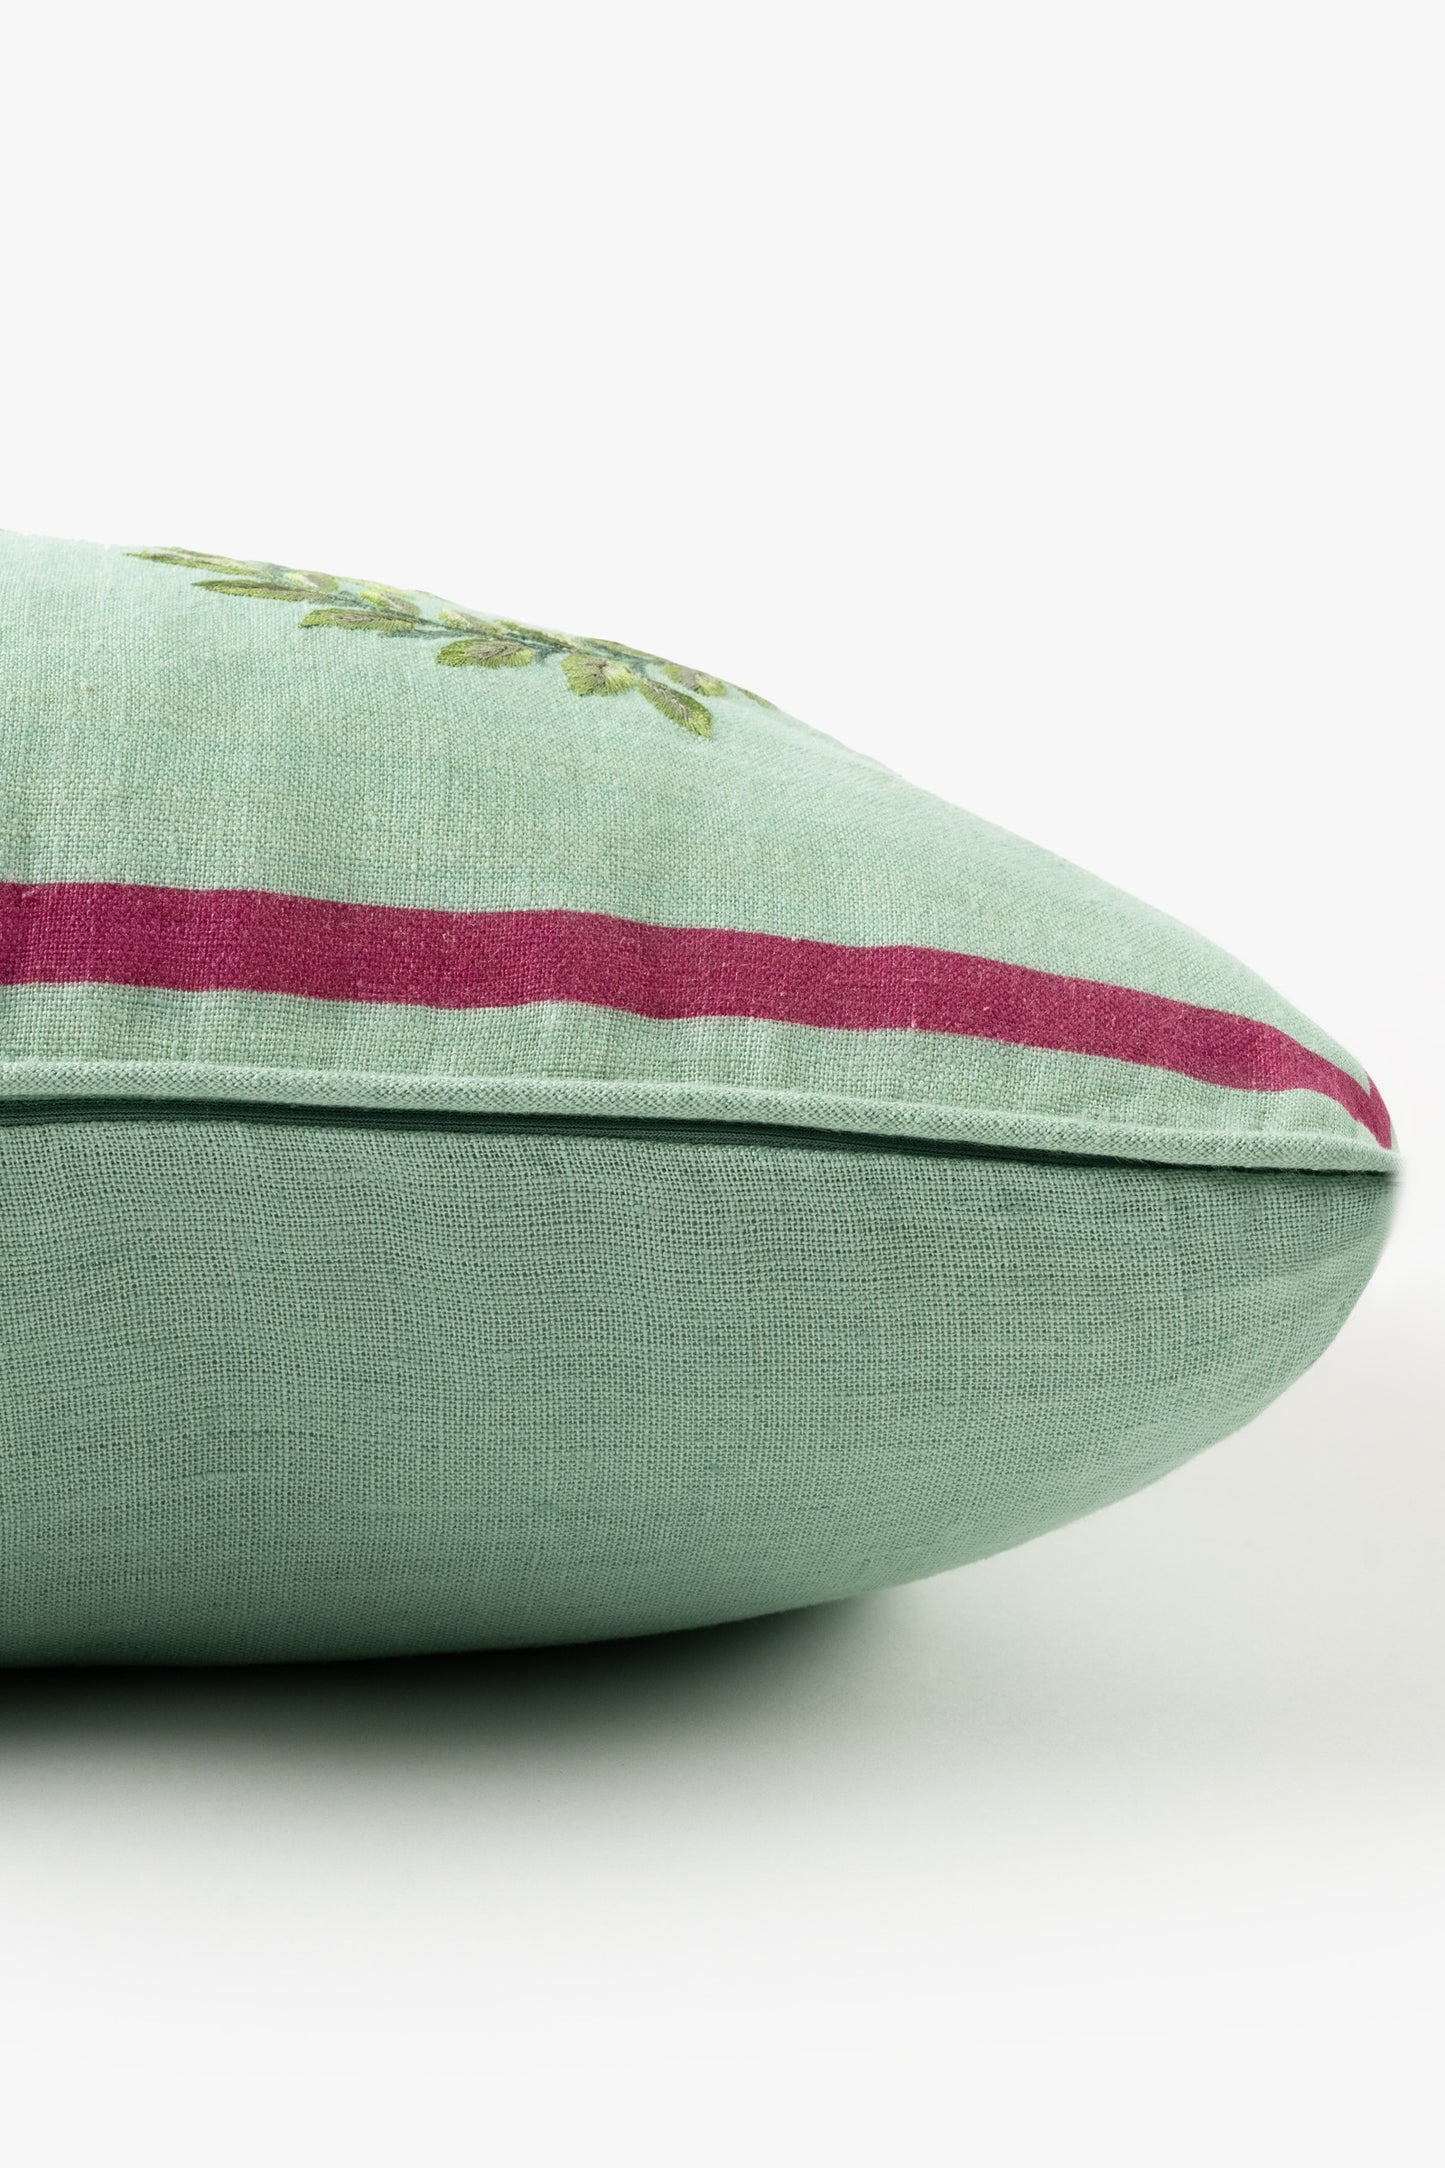 Embroidered Fern Pillow in Linen Seafoam